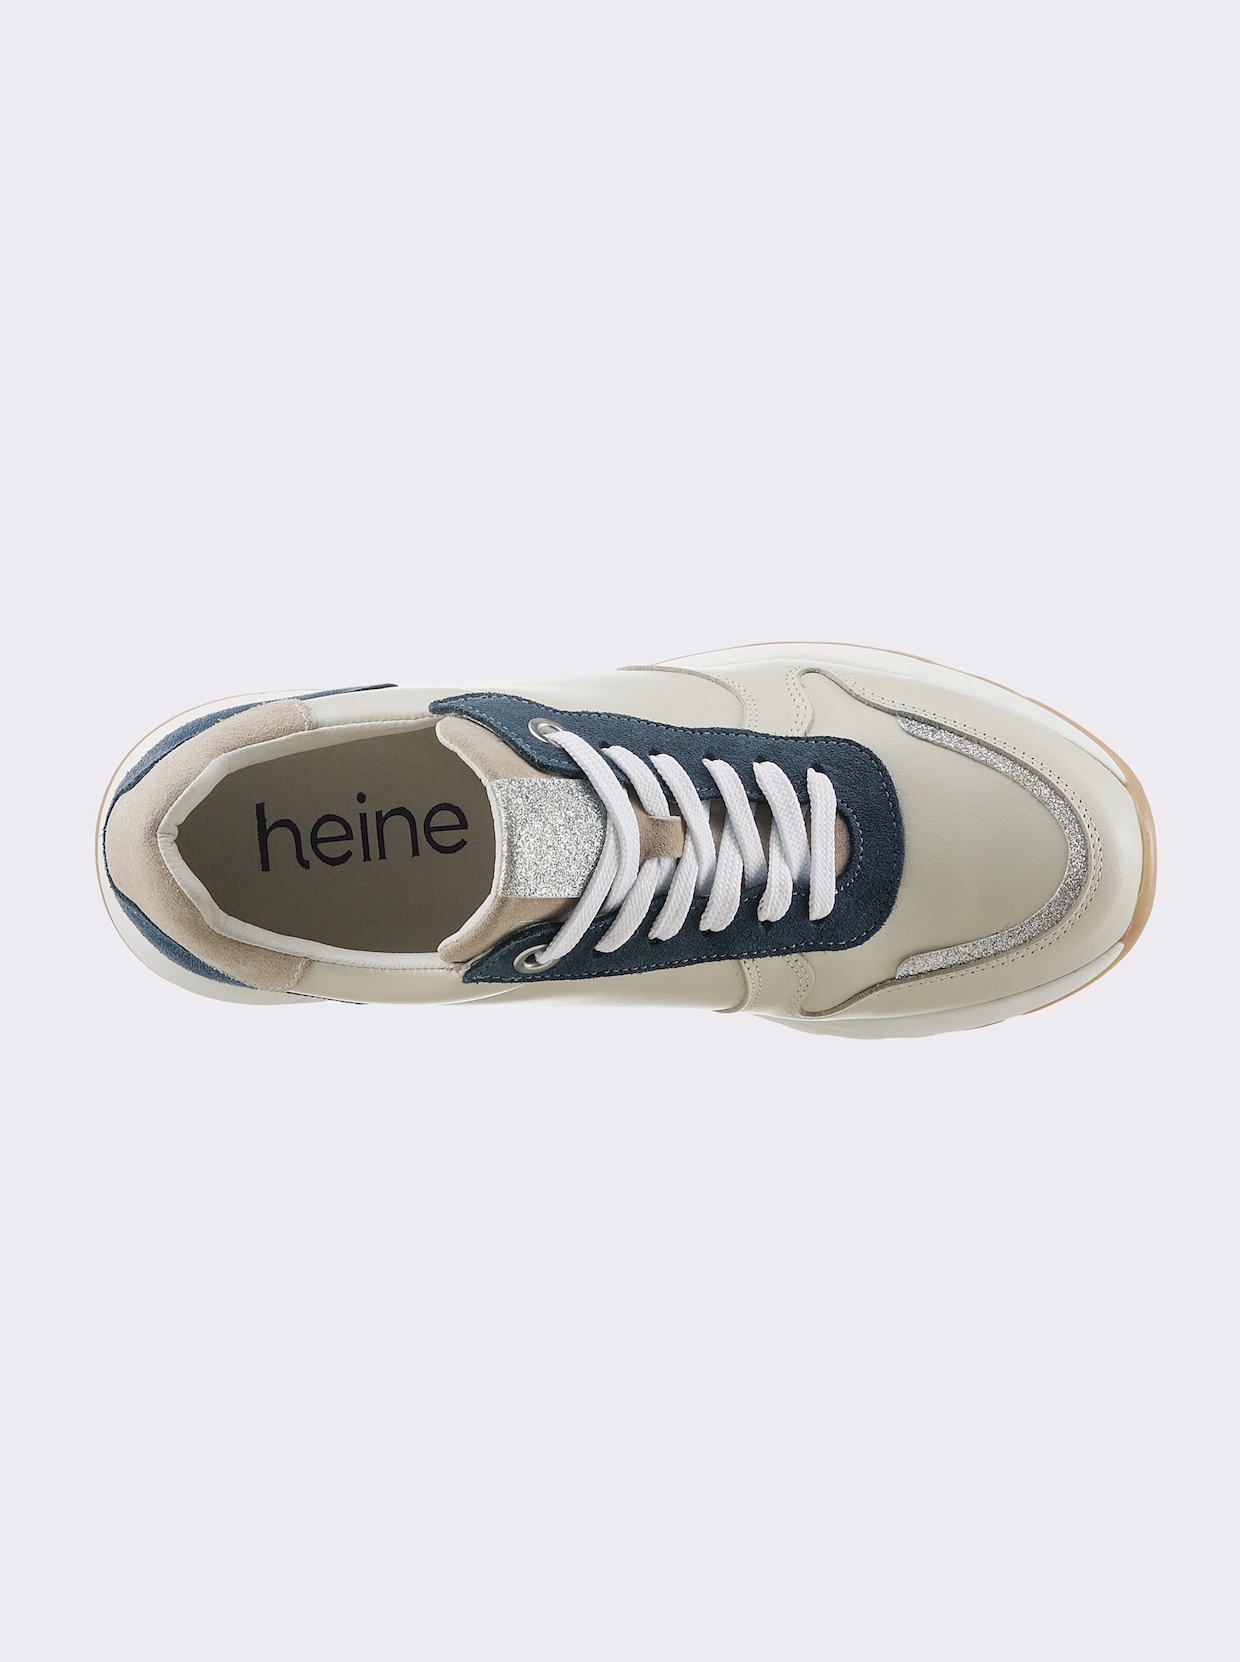 heine Sneaker - beige/blauw